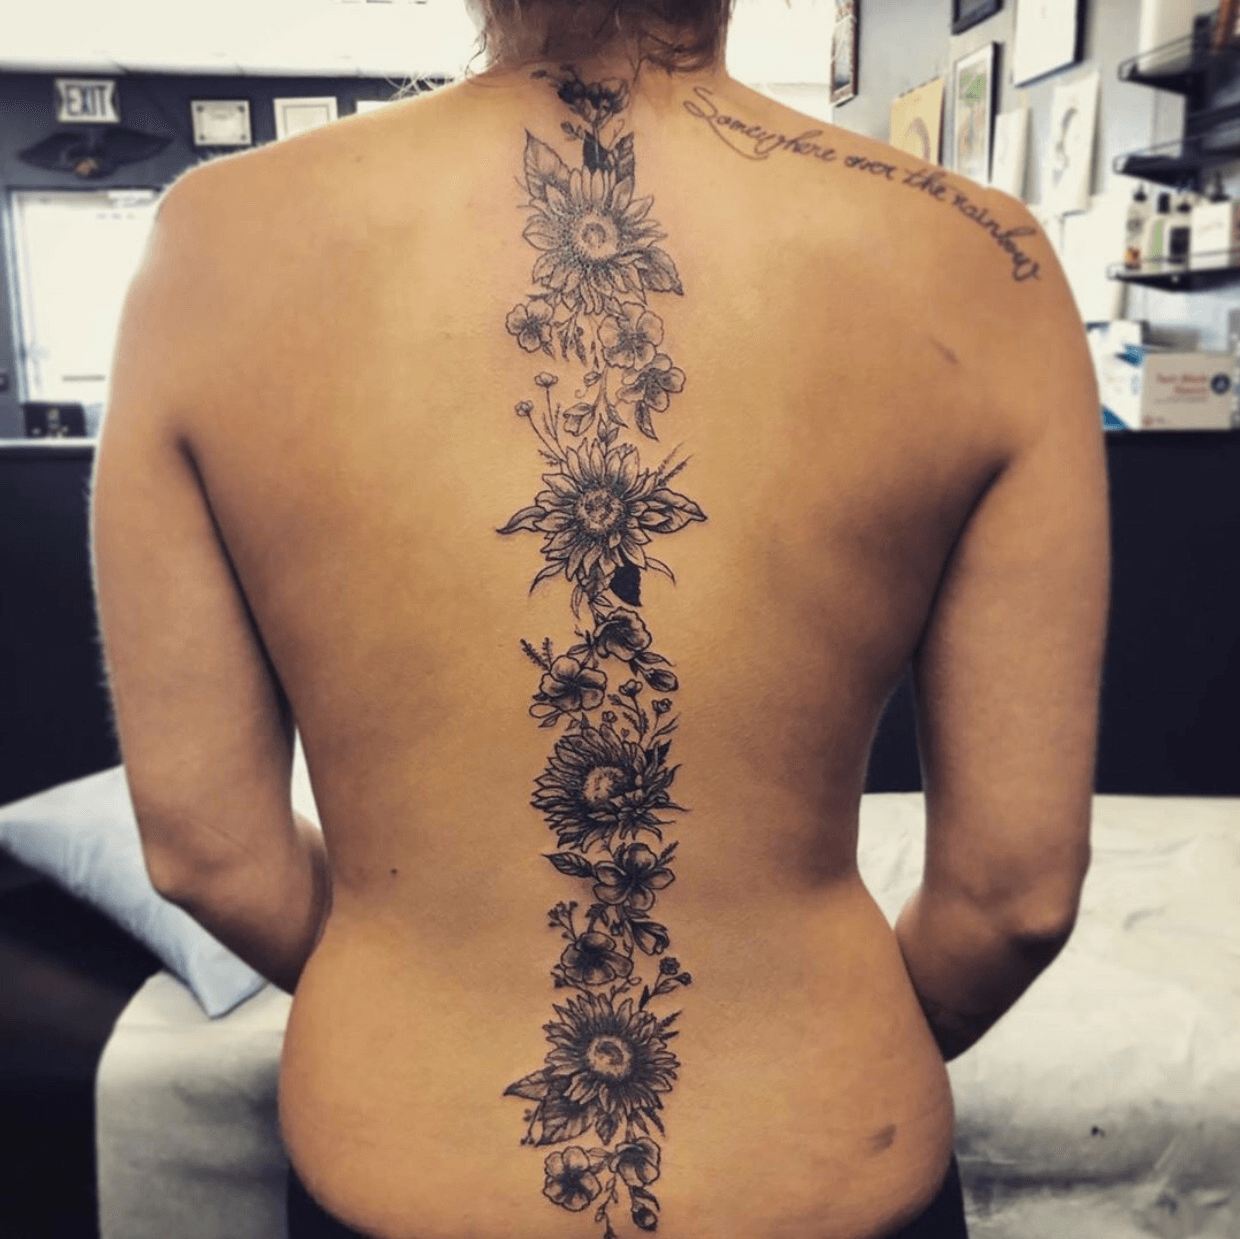 Sunflower spine tattoo  Spine tattoos for women Tattoos Tattoos for women